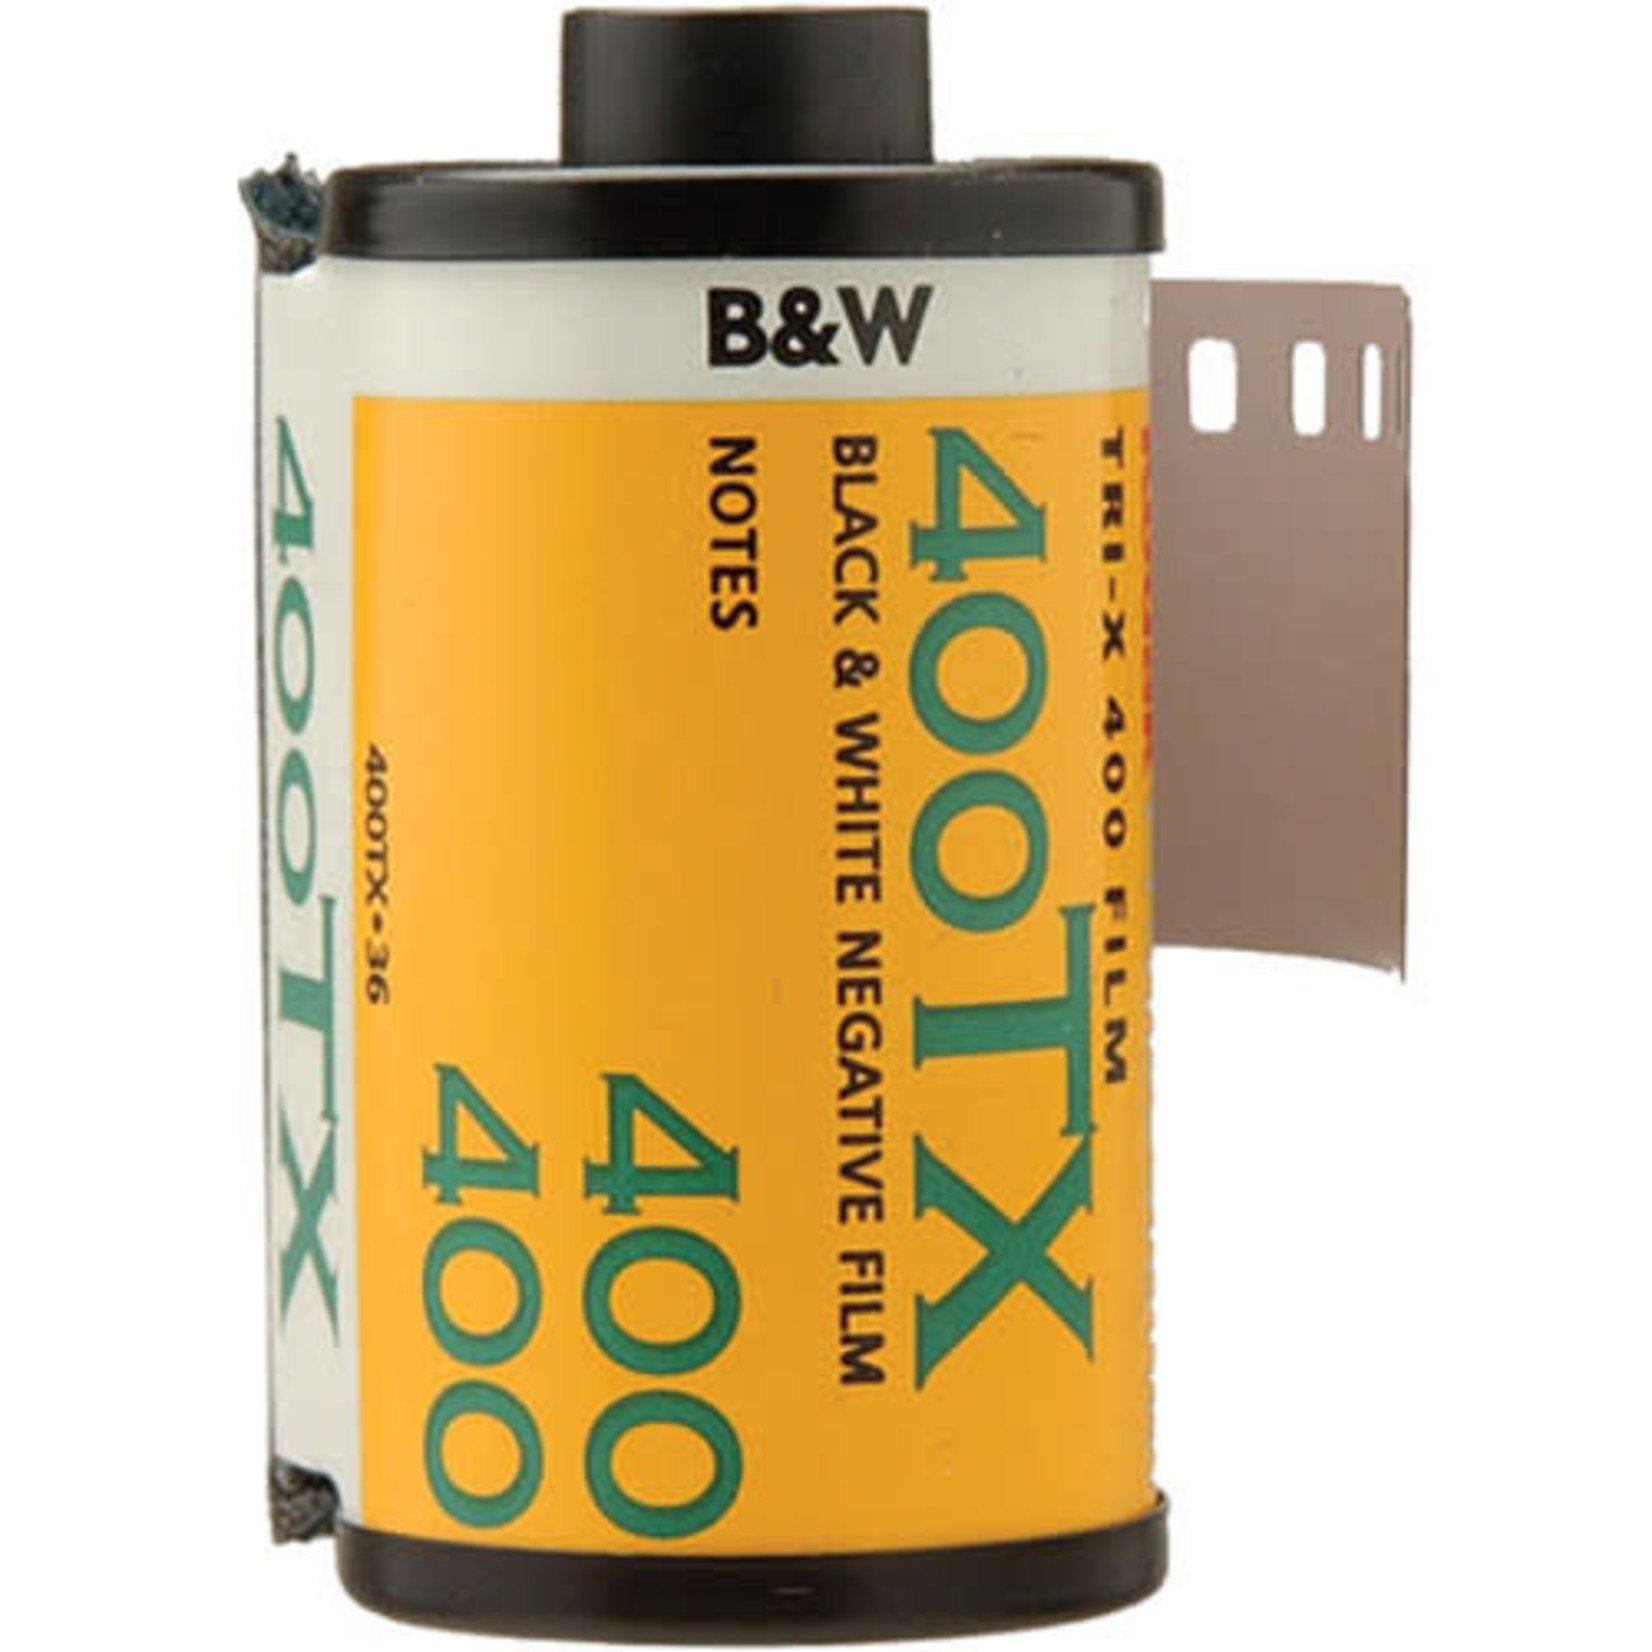 Kodak Kodak Professional Tri-X 400 Black and White Negative Film (35mm Roll Film, 36 Exposures)